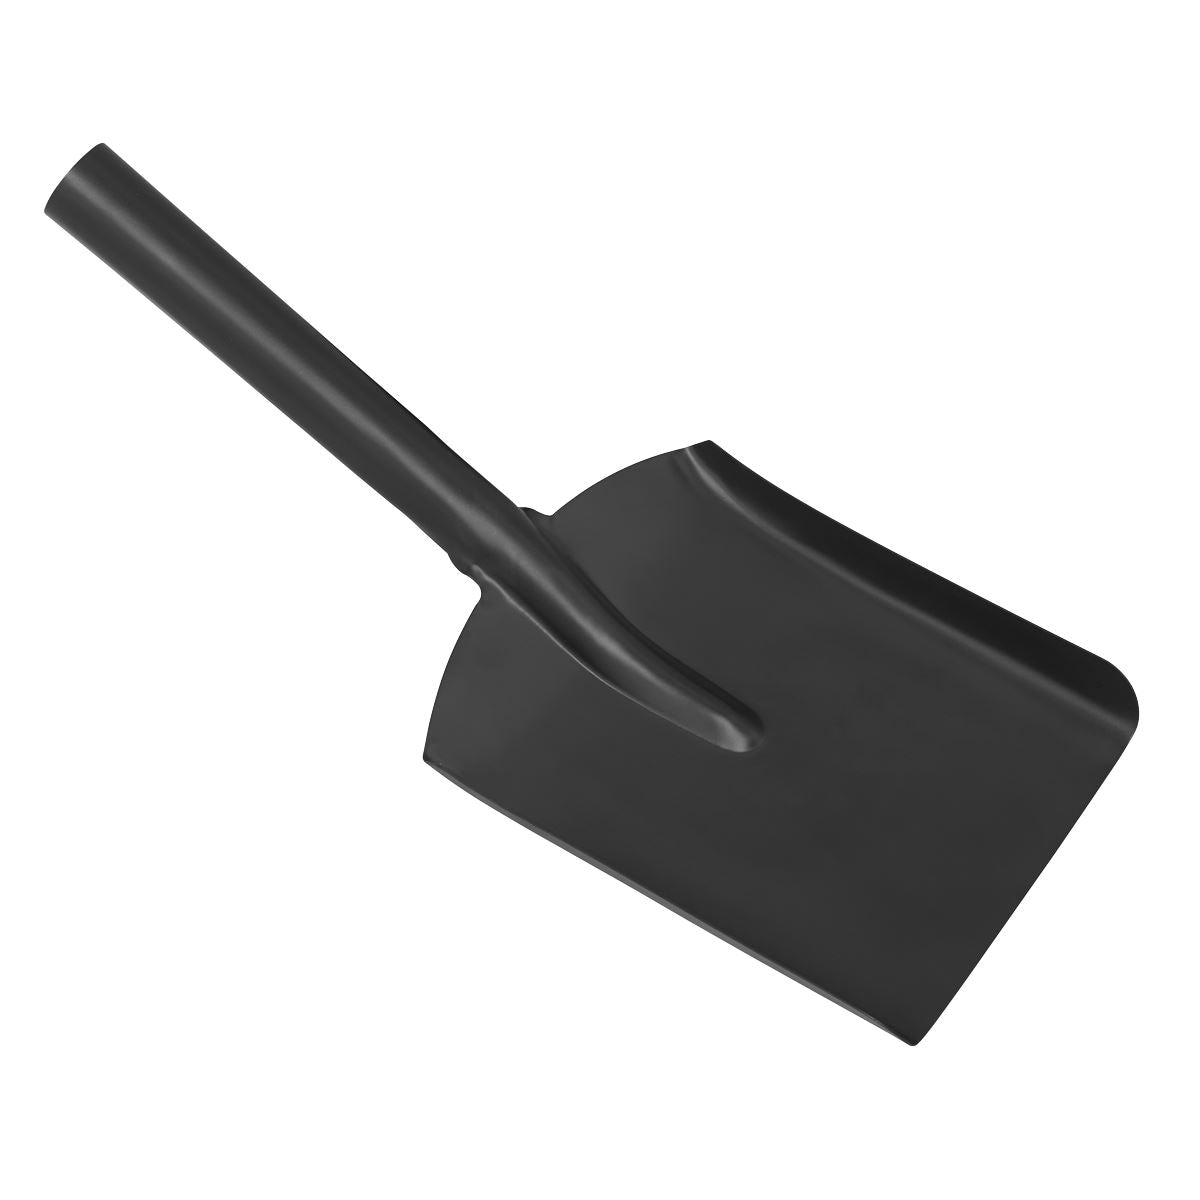 Sealey Coal Shovel 6" with 185mm Handle